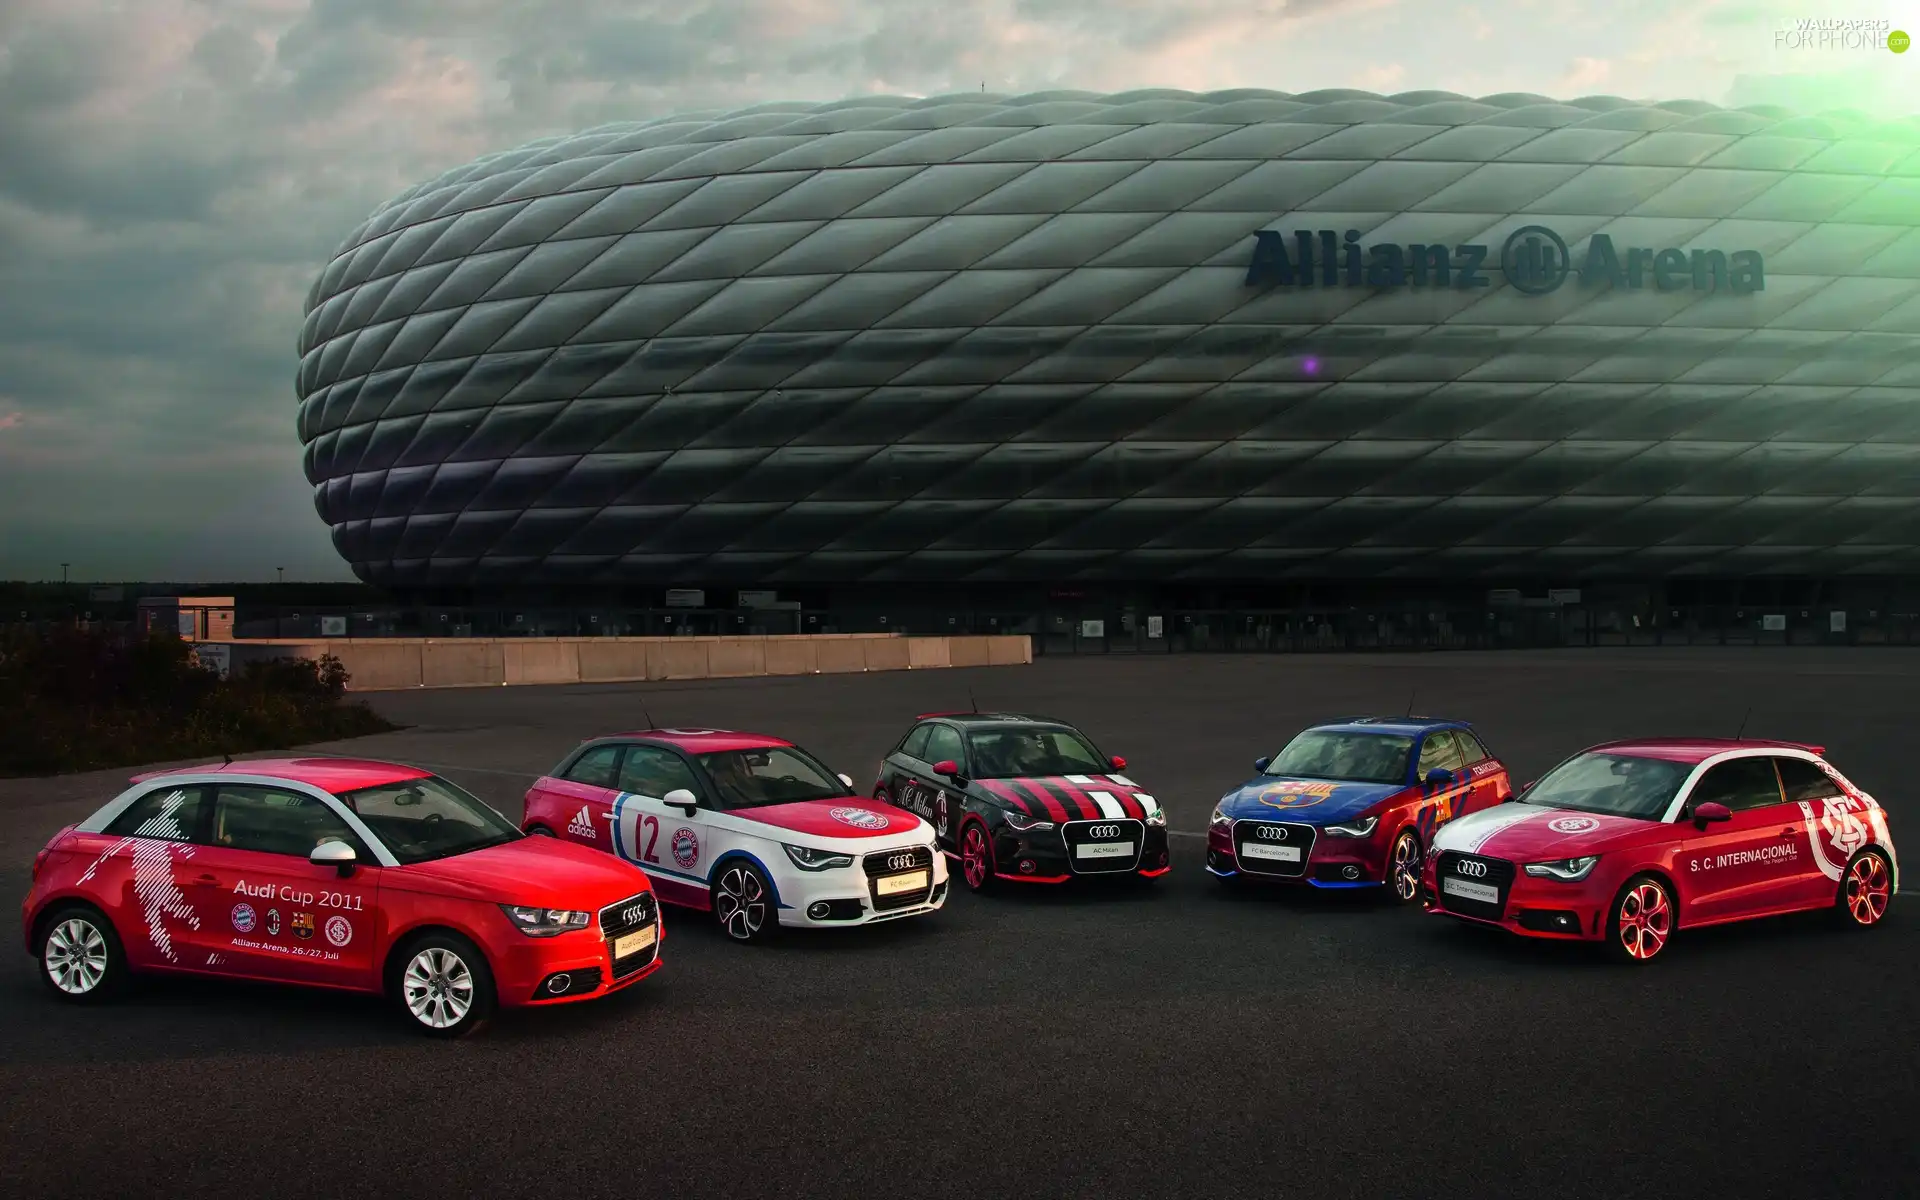 Munich, Stadium, cars, Audi, Germany, Allianz Arena